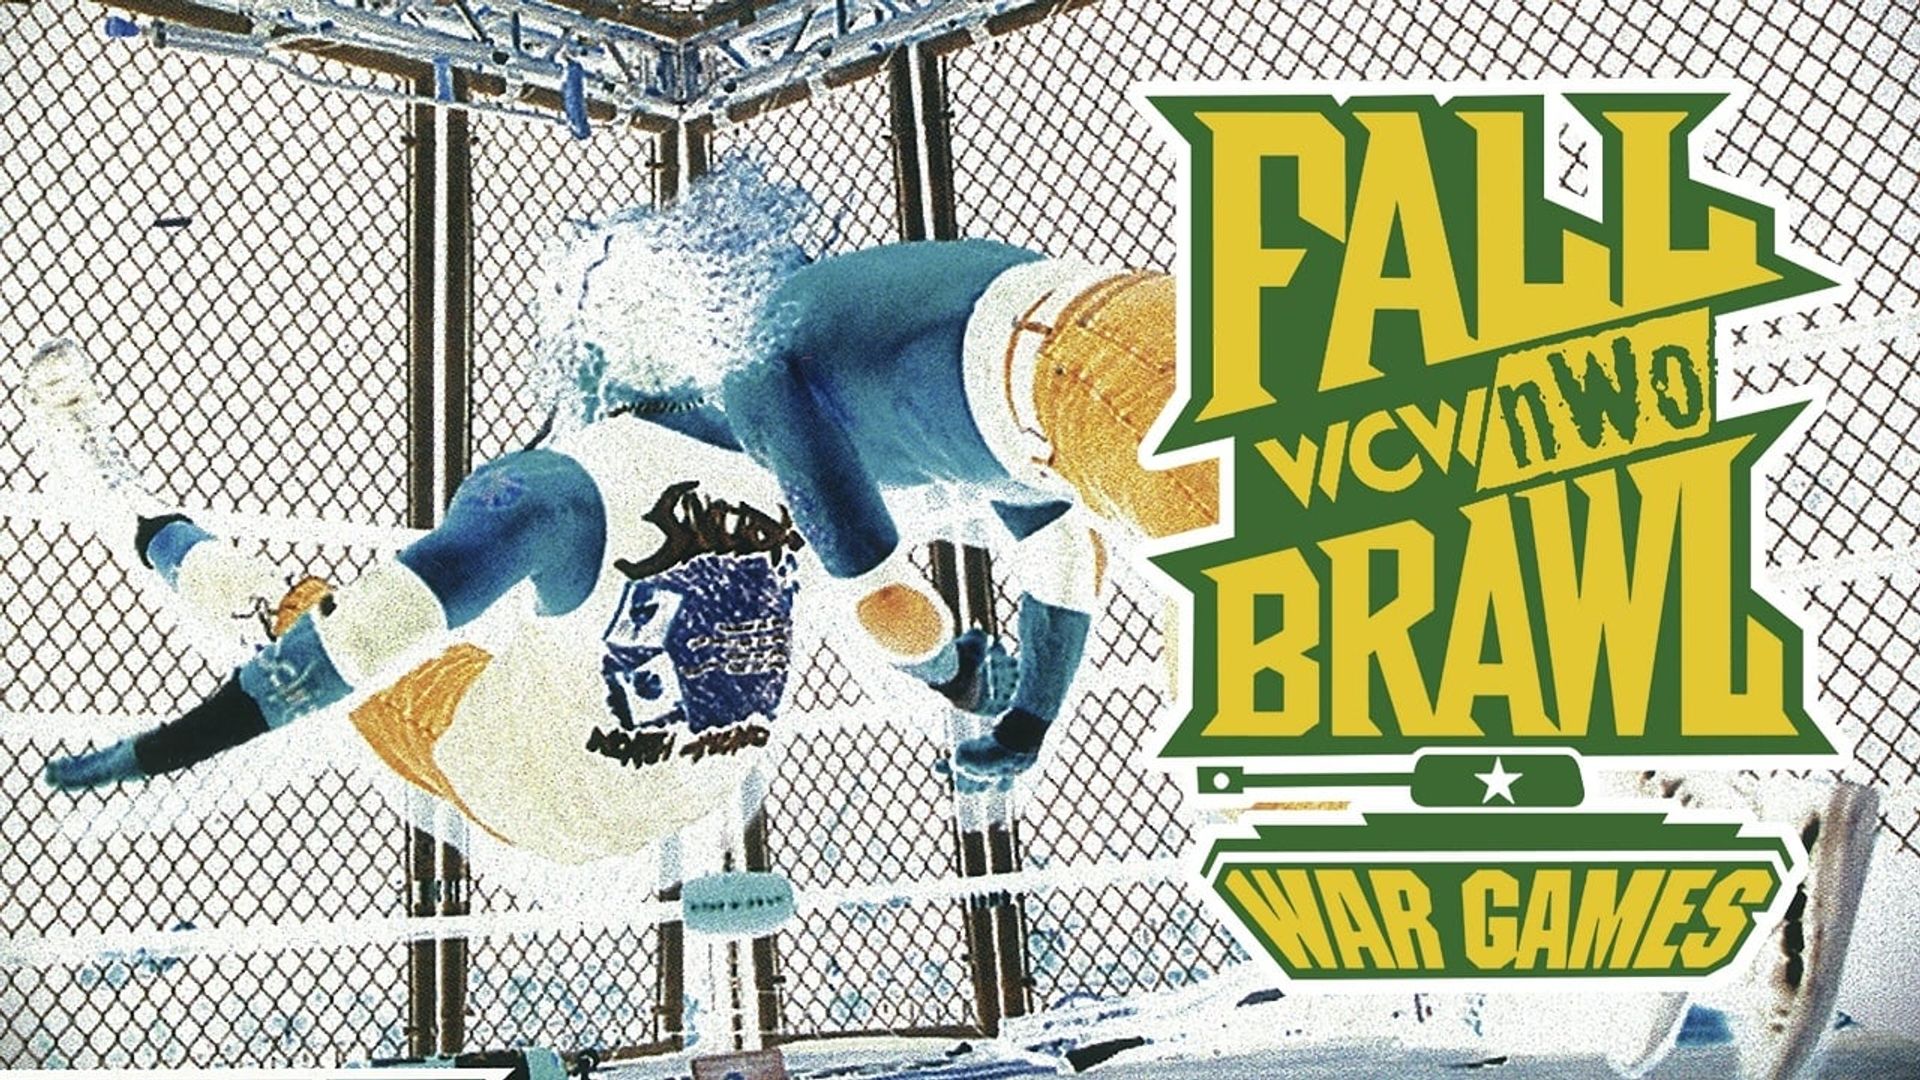 WCW/NWO Fall Brawl: War Games background